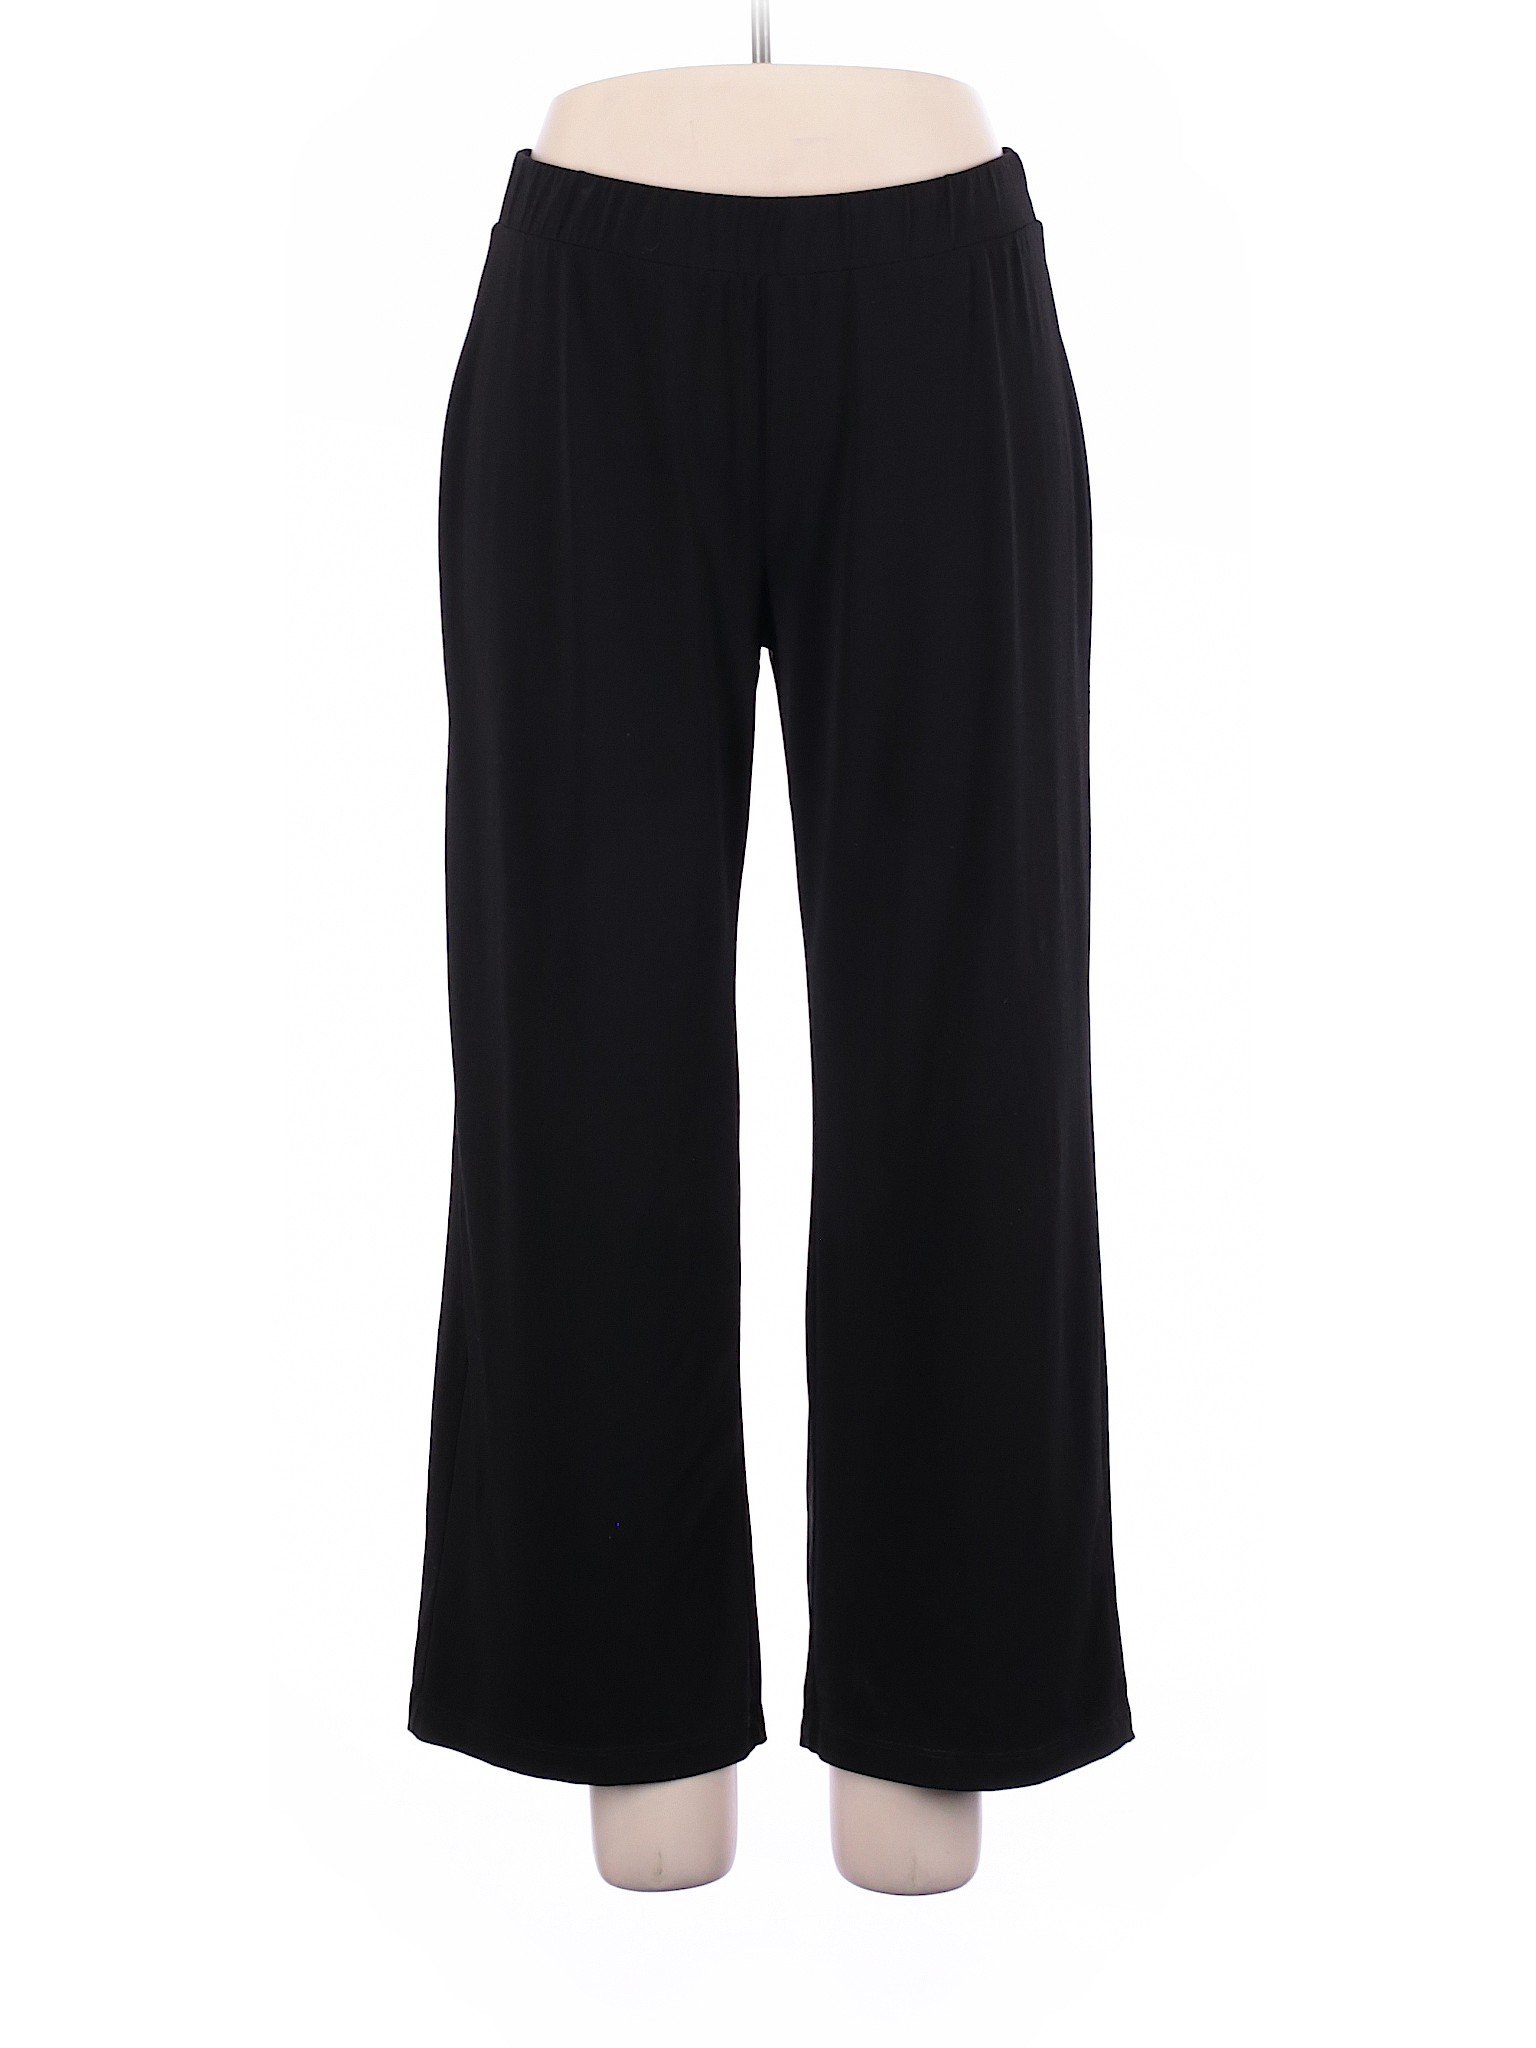 Elementz Women Black Dress Pants 1X Plus | eBay